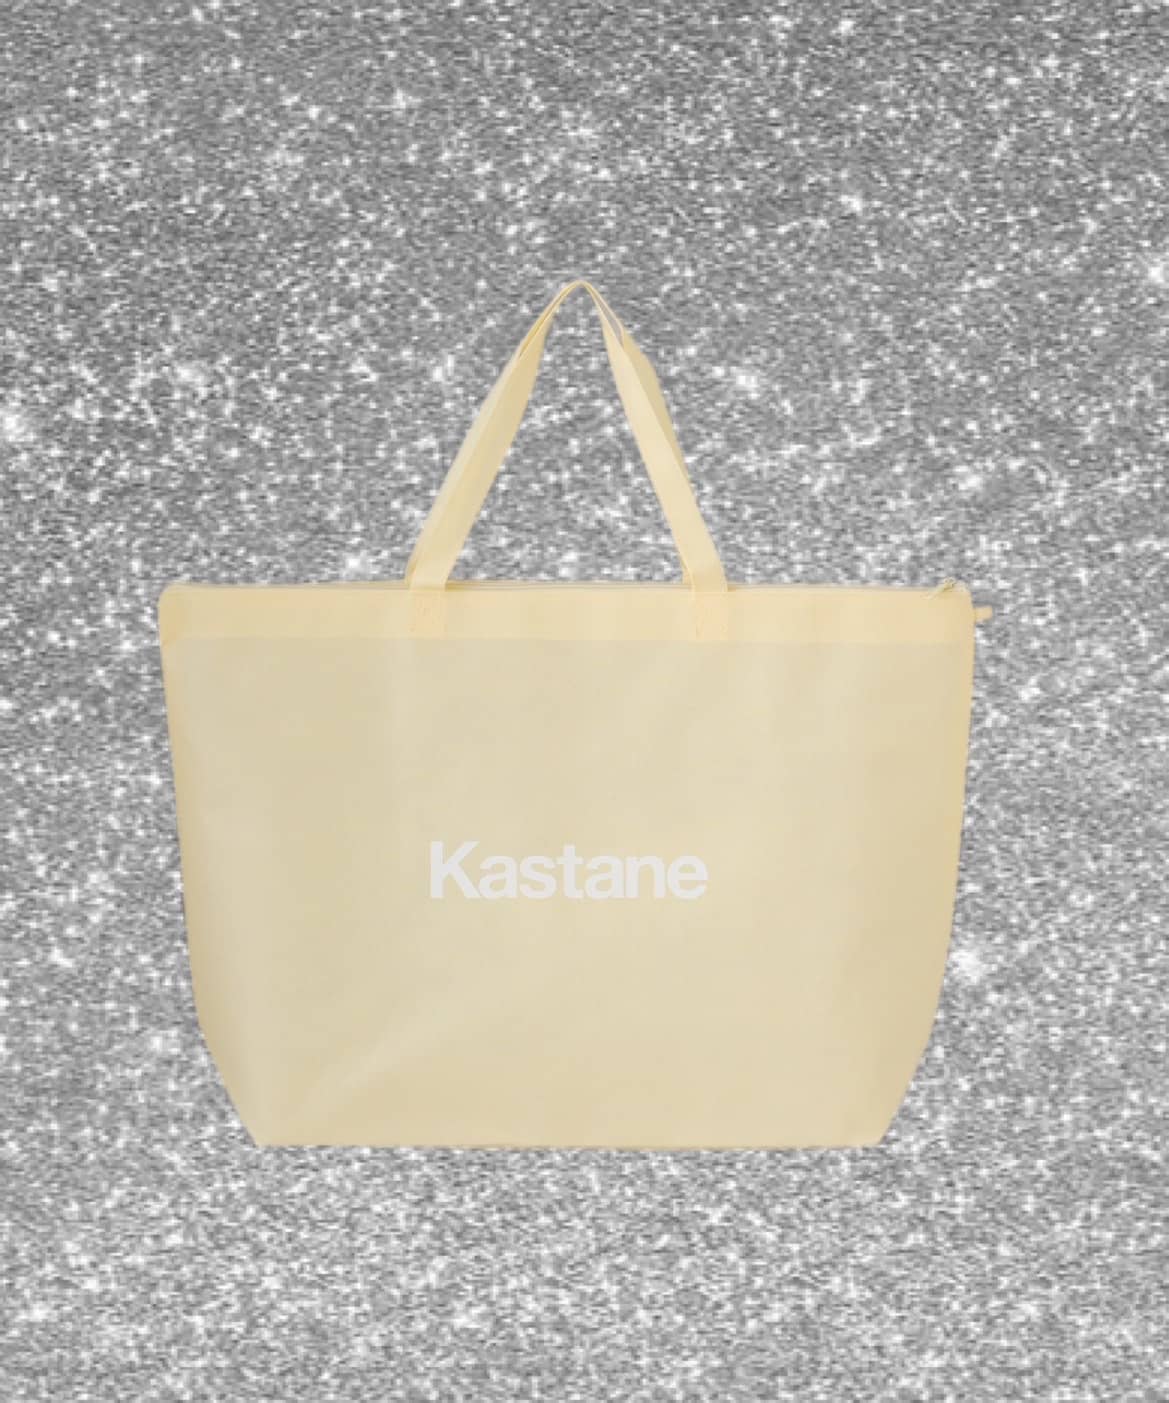 少量現貨】kastane 22024福袋HAPPY BAG 日本福袋日本服飾| 舔手指日本 